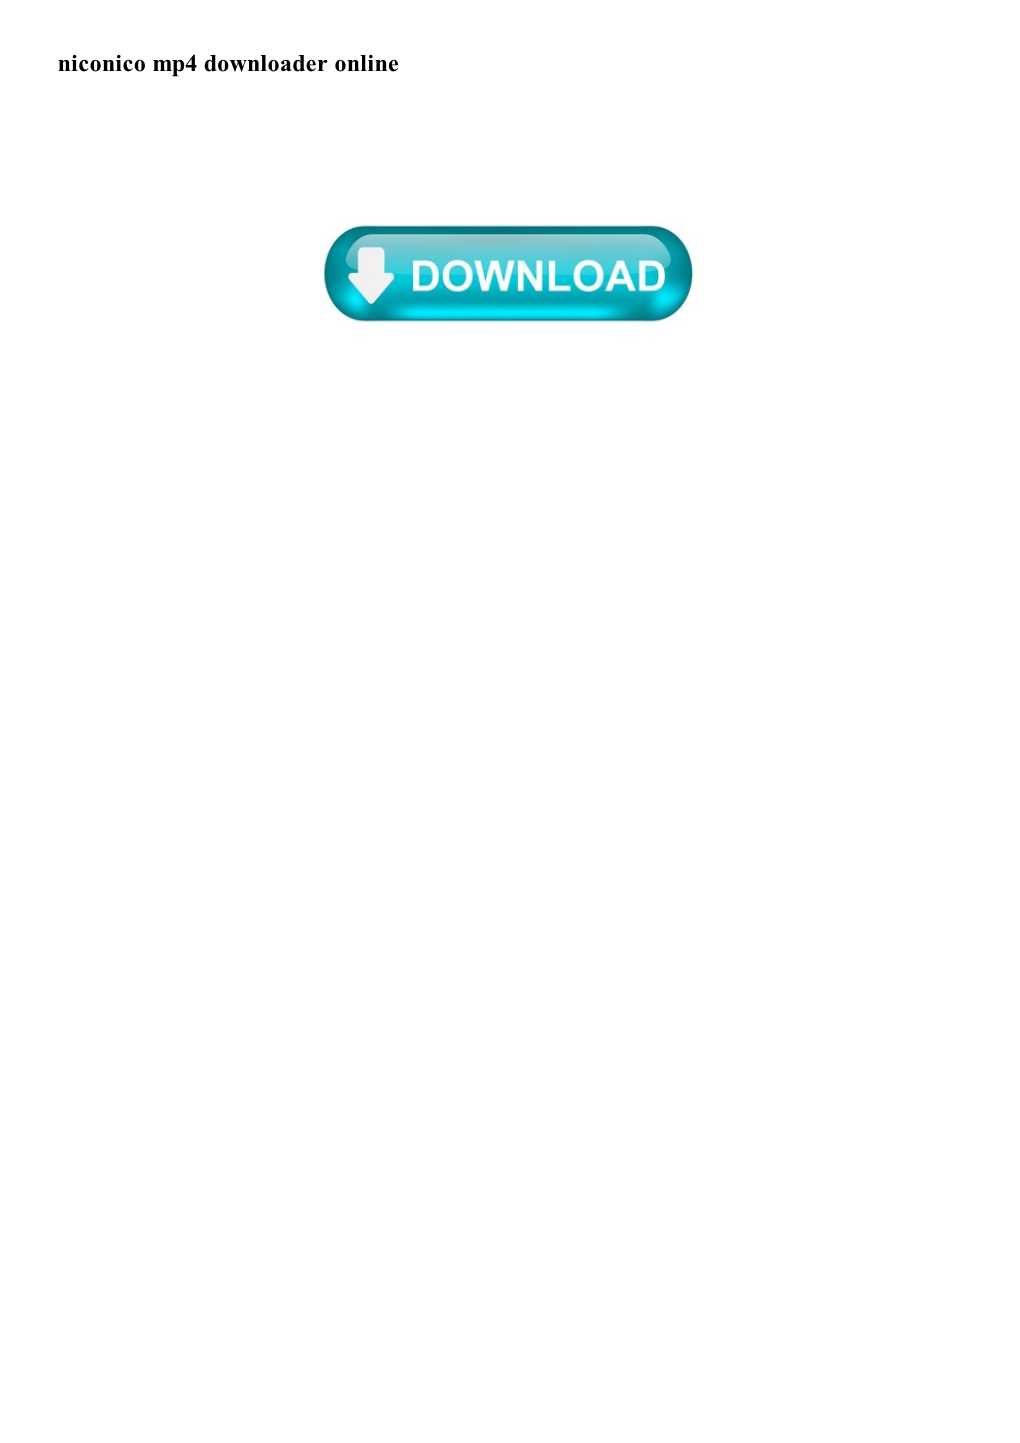 Niconico Mp4 Downloader Online Convert Niconico Video to Mp4